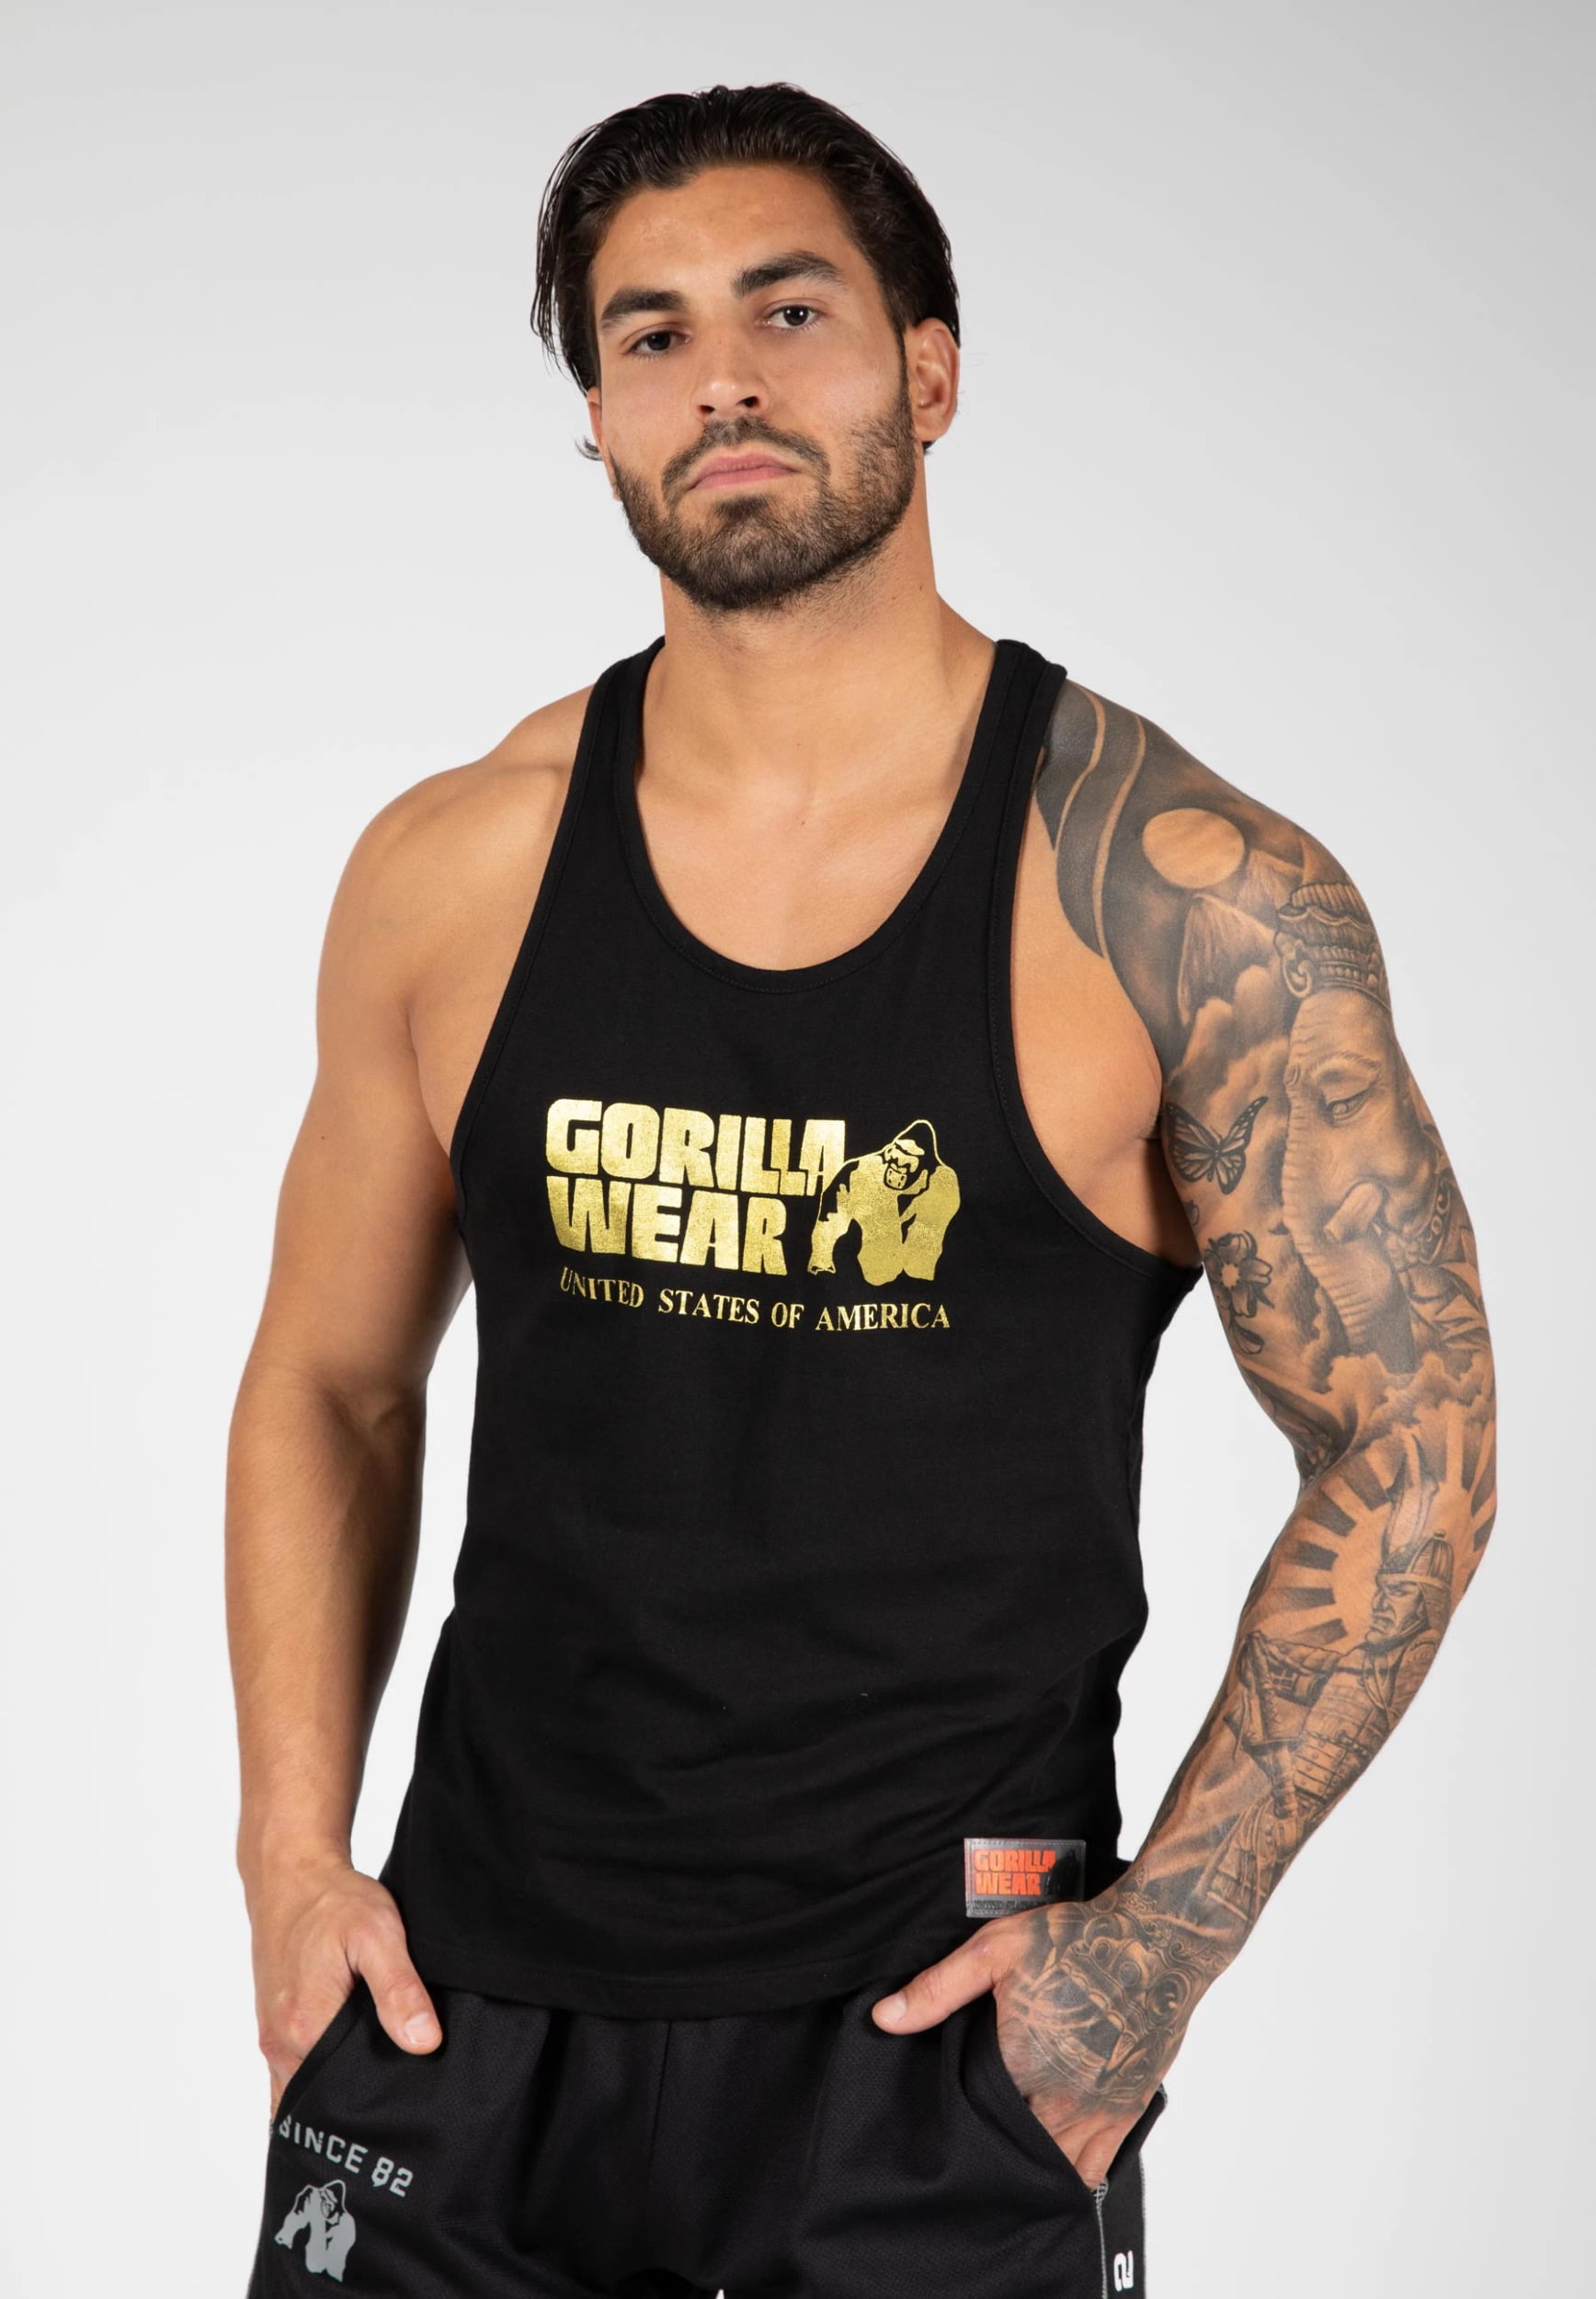 Gorilla wear sleeveless tank top men Fitness muscle Bodybuilding workout vest 